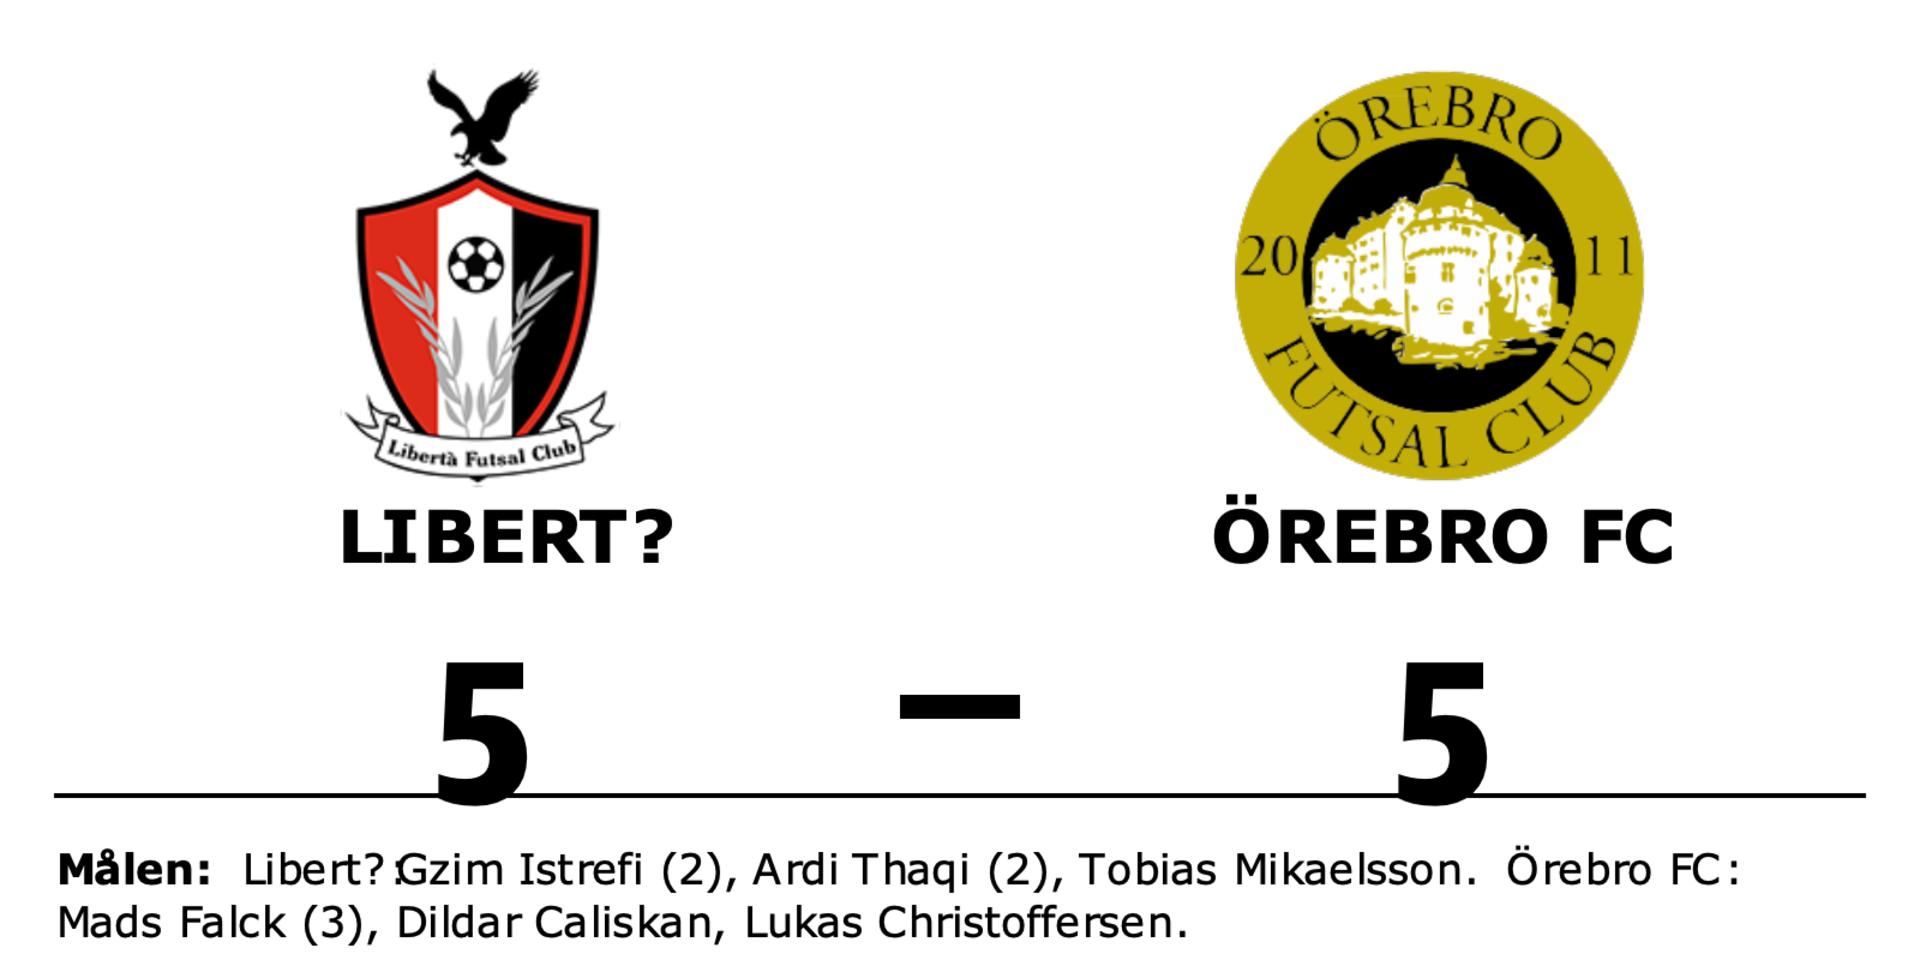 Libertà spelade lika mot Örebro FC